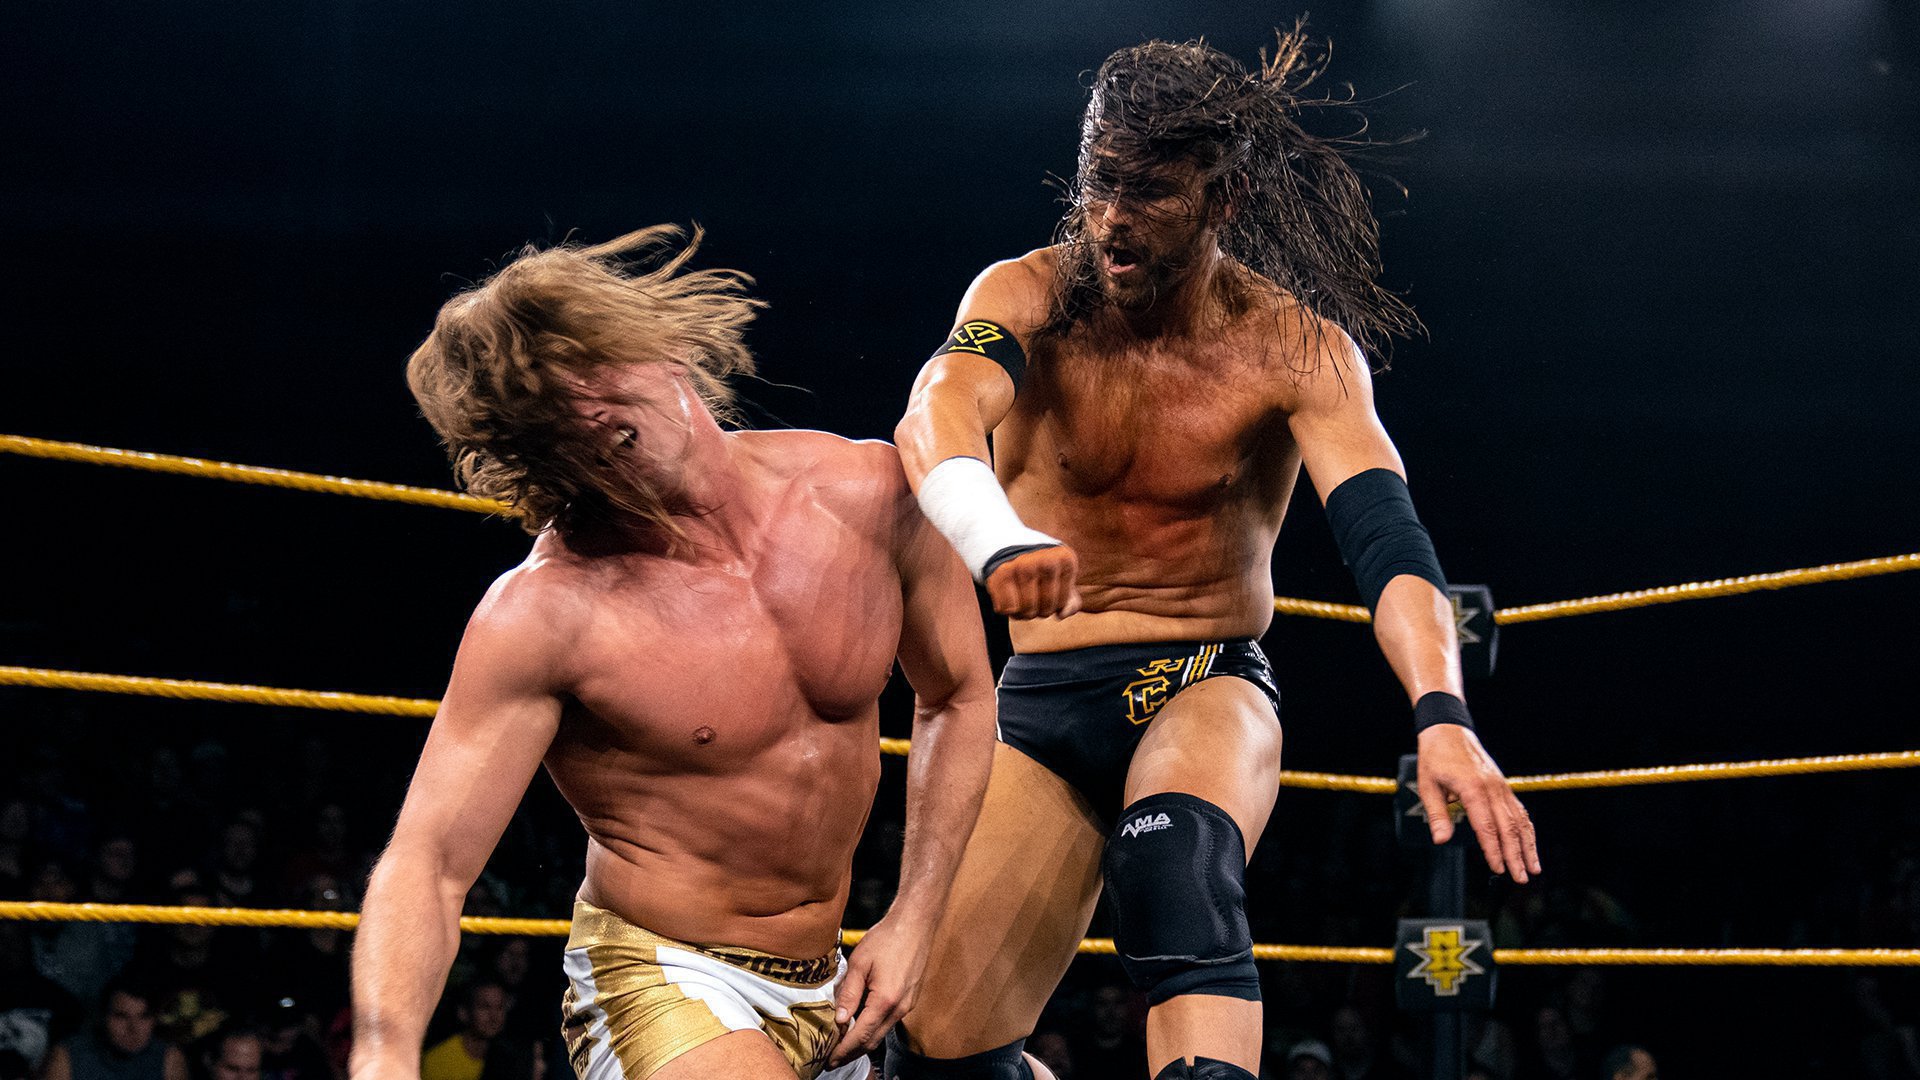 Matt Riddle vs. Killian Dain - Street Fight: NXT, Sept. 